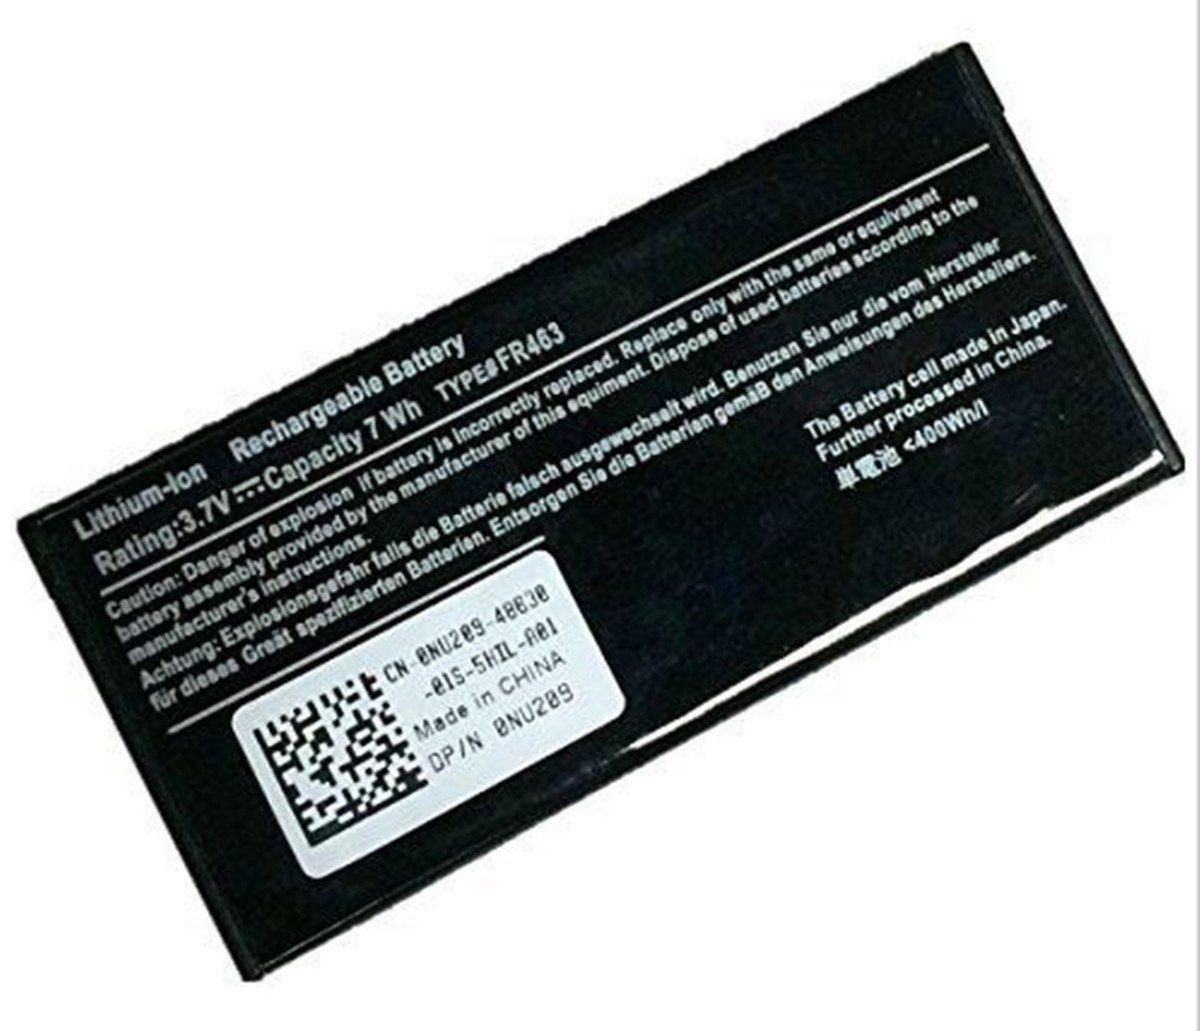 Dell Poweredge Perc 6i battery